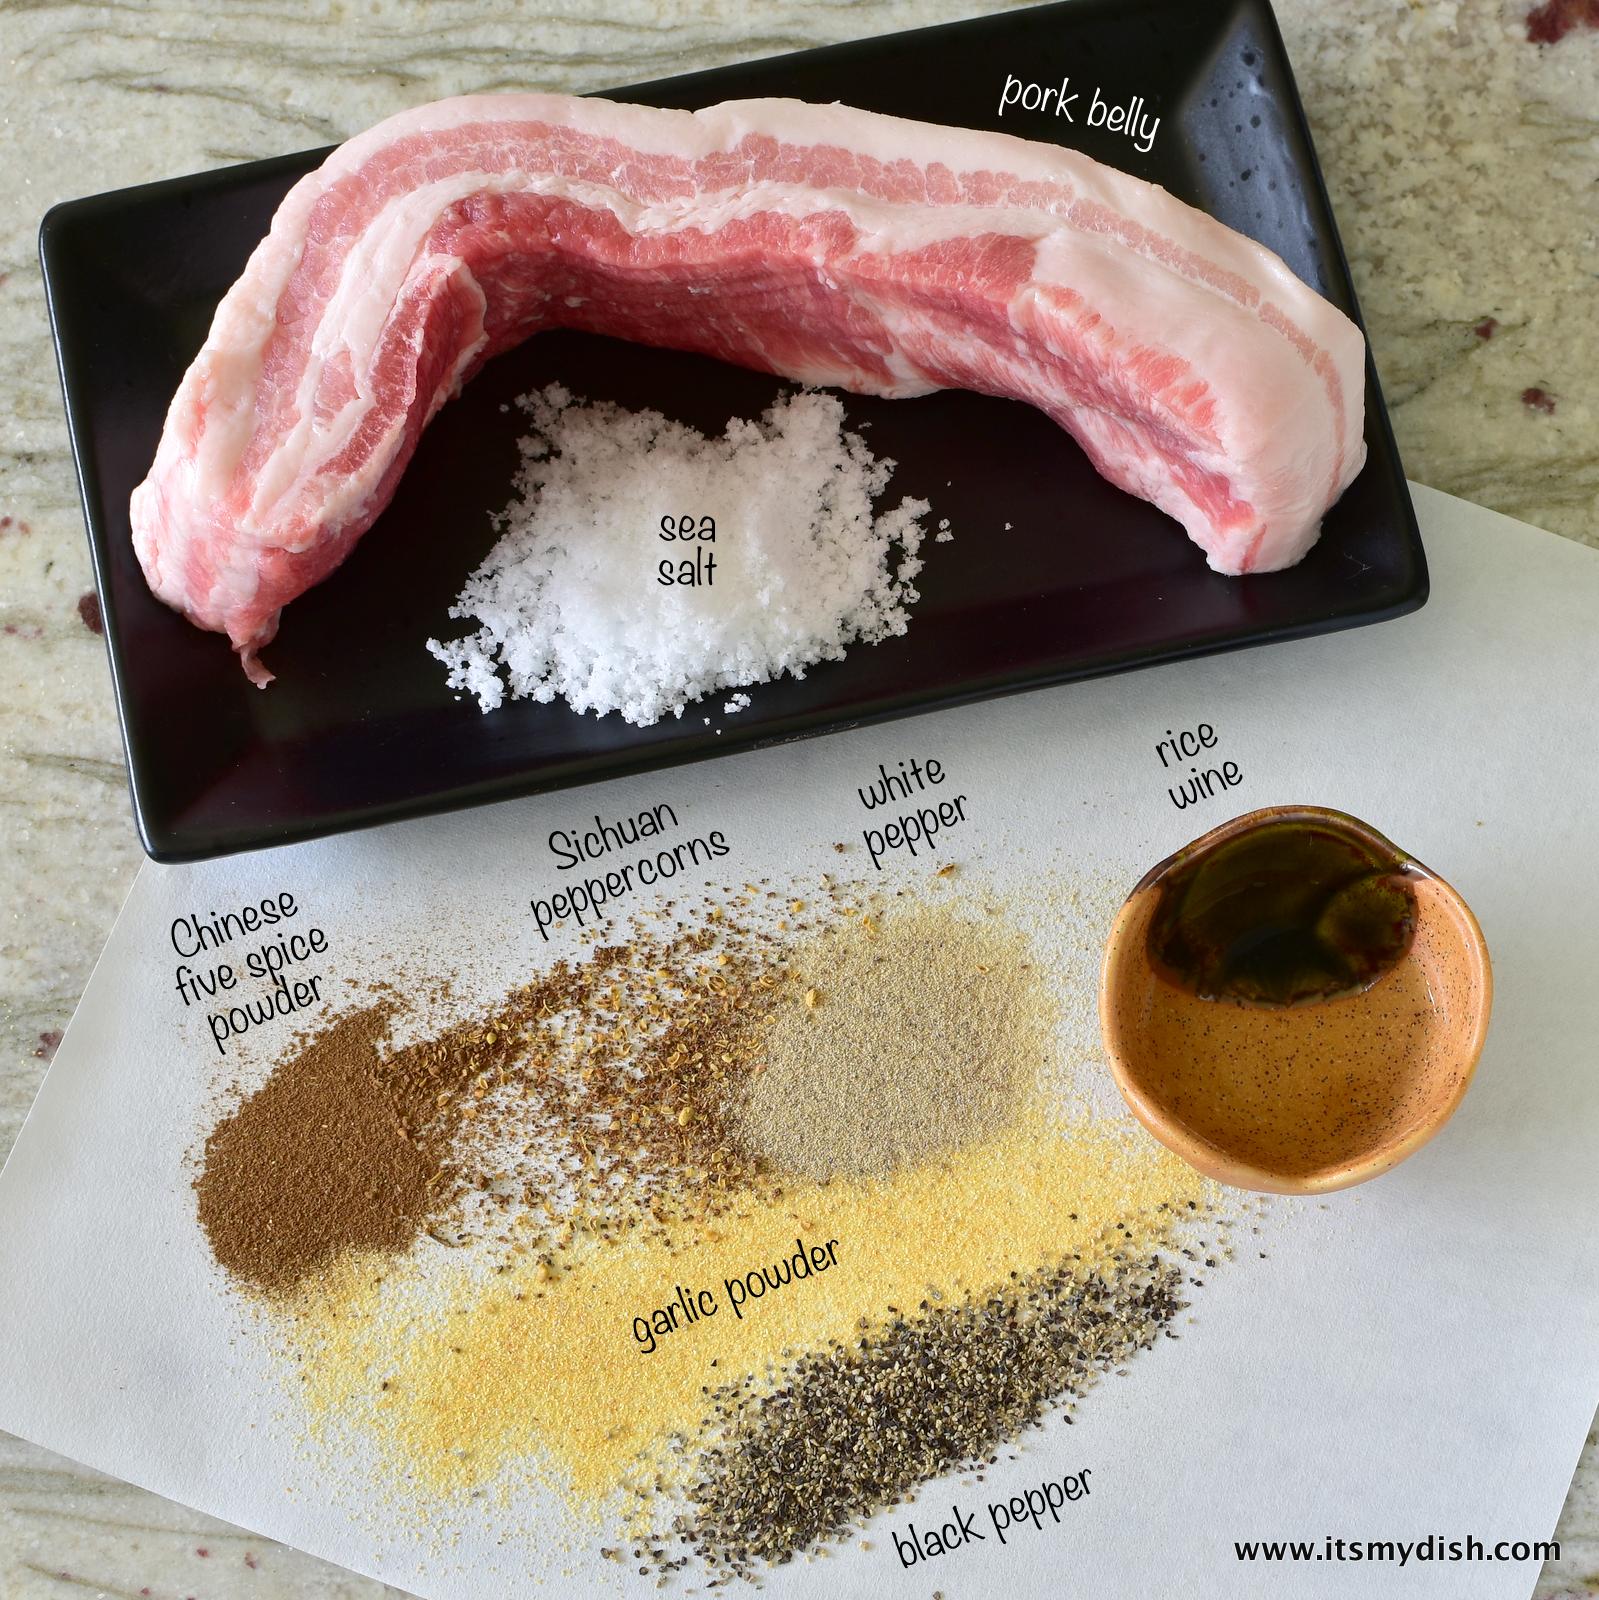 https://itsmydish.com/wp-content/uploads/2015/09/salted-pork-ingredients.jpg